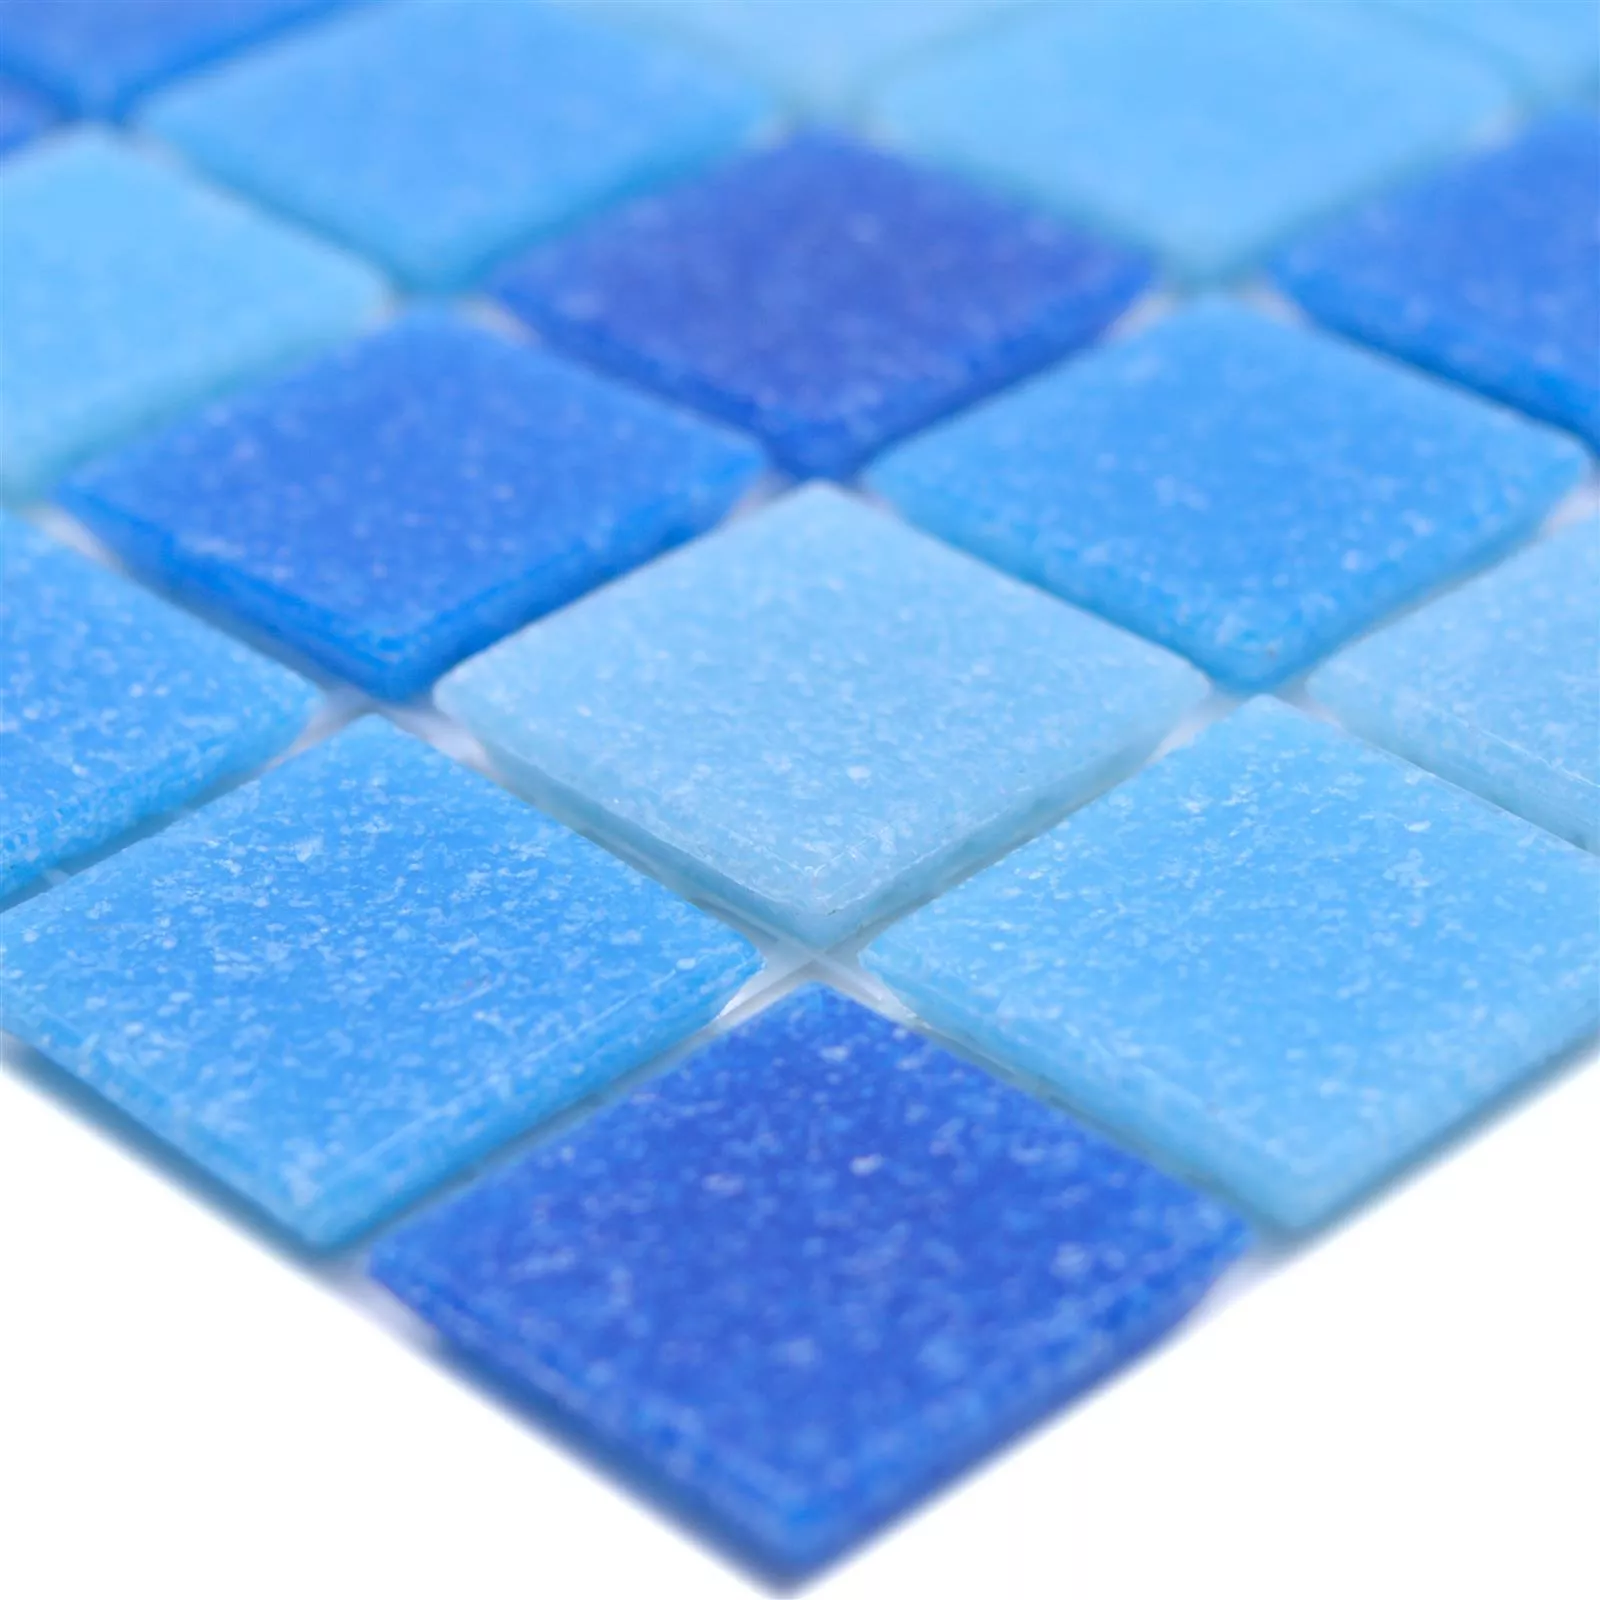 Prov Simbassäng Mosaik North Sea Blå Mix